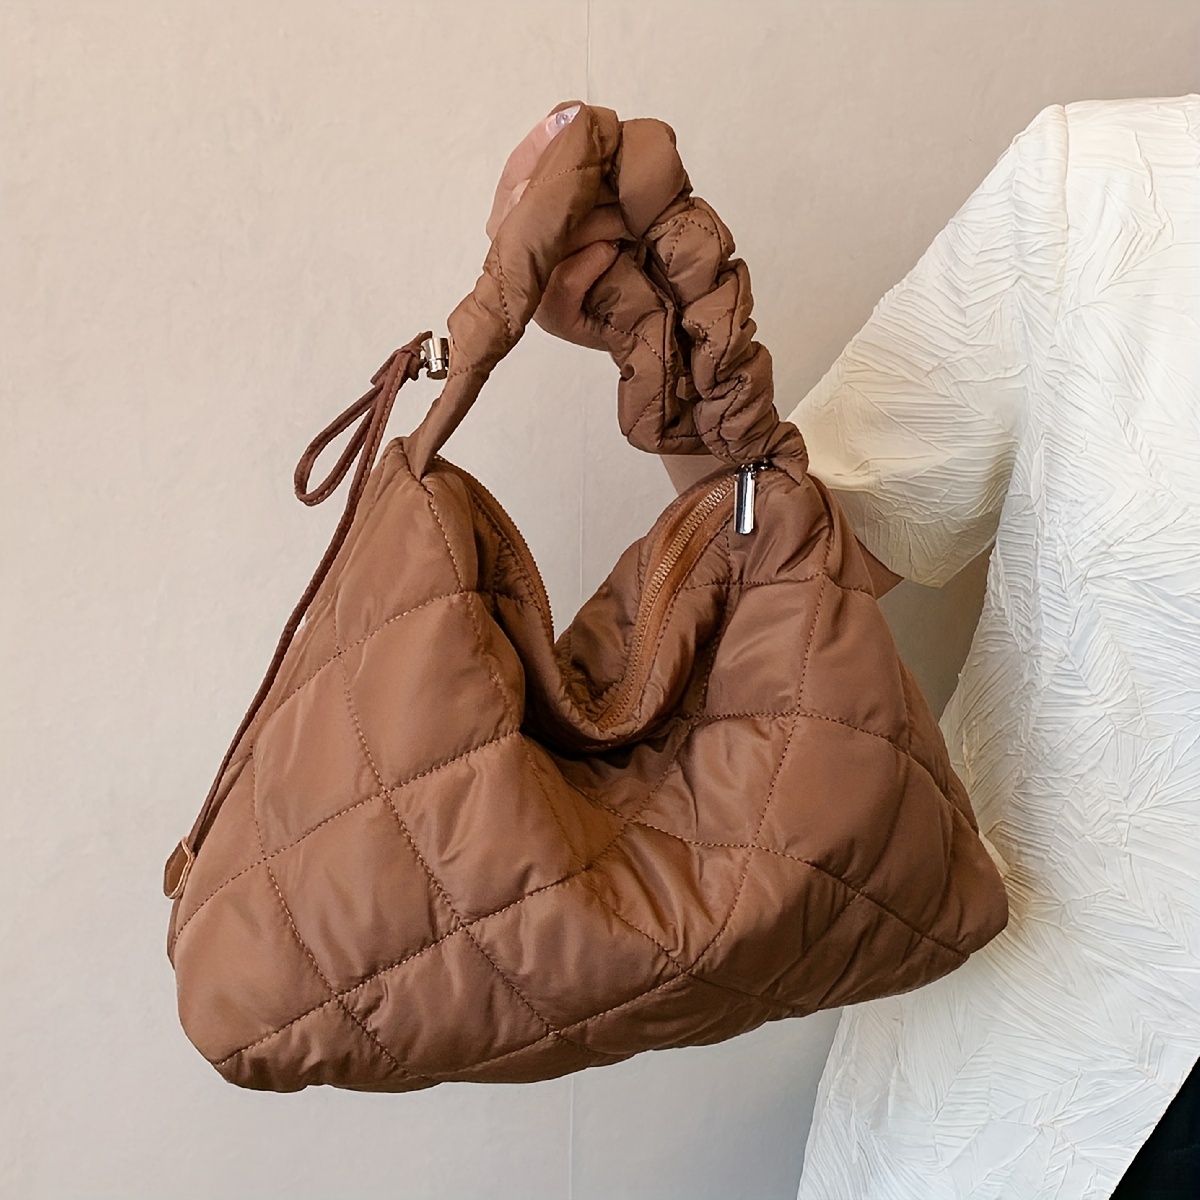 top○Goyard Bag Shopping Zipper Style Tote Dog Tooth Large Capacity Canvas  Shoulder Handbag 824